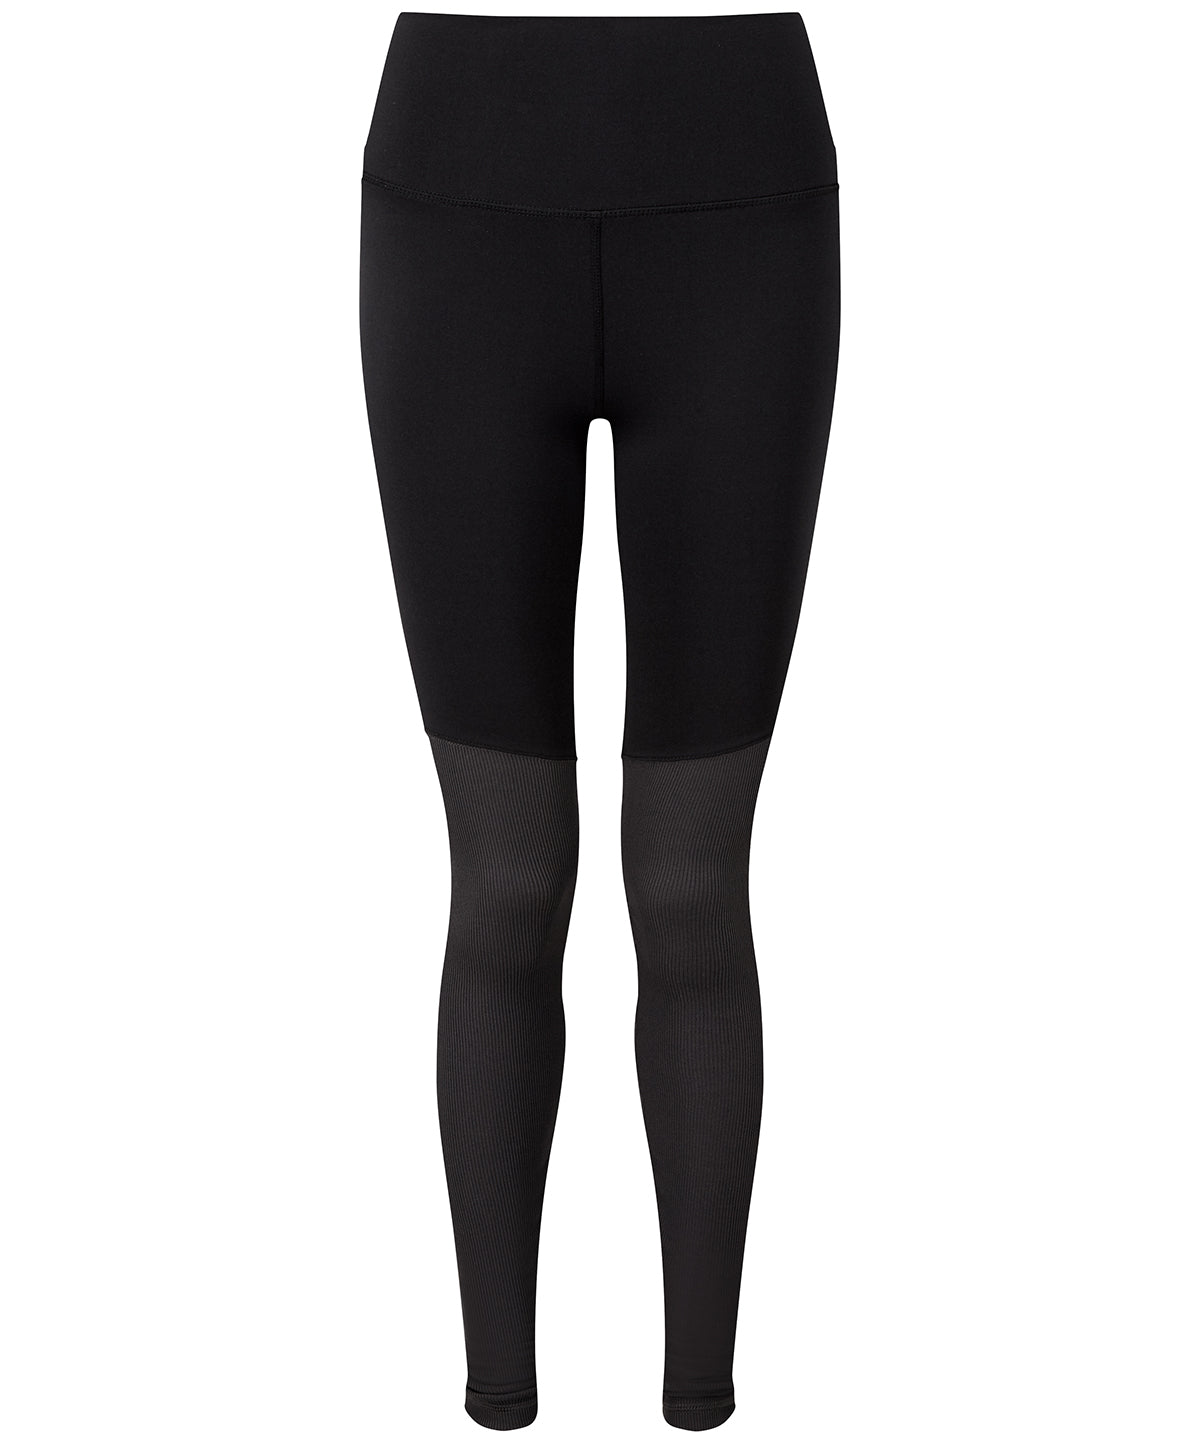 Black/Charcoal - Women's TriDri® yoga leggings Leggings TriDri® Activewear & Performance, Exclusives, Leggings, Plus Sizes, Rebrandable, Sports & Leisure, Trousers & Shorts Schoolwear Centres